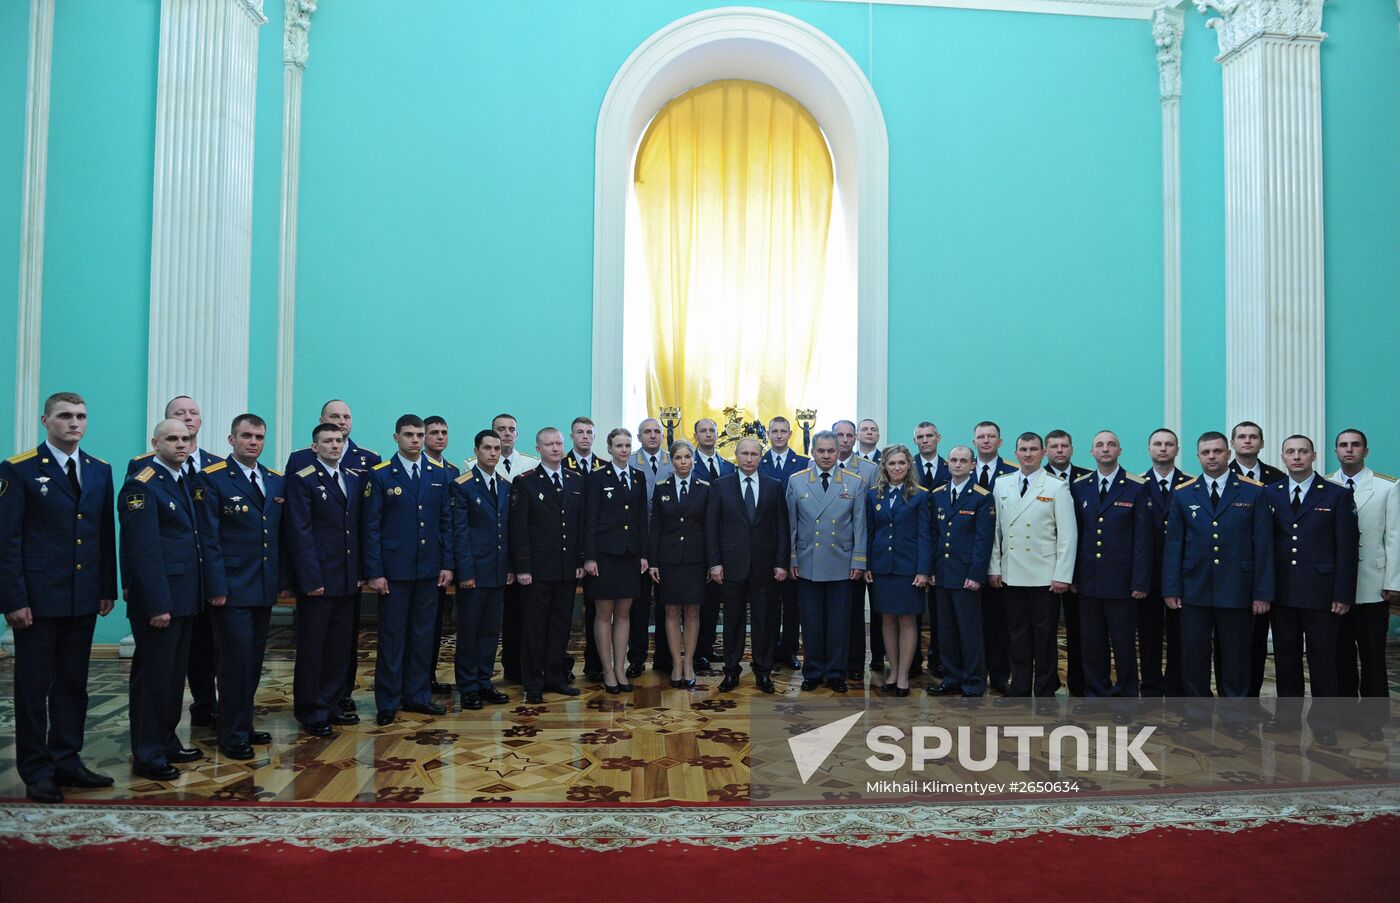 Russian President Vladimir Putin hosts reception in honor of military academy graduates